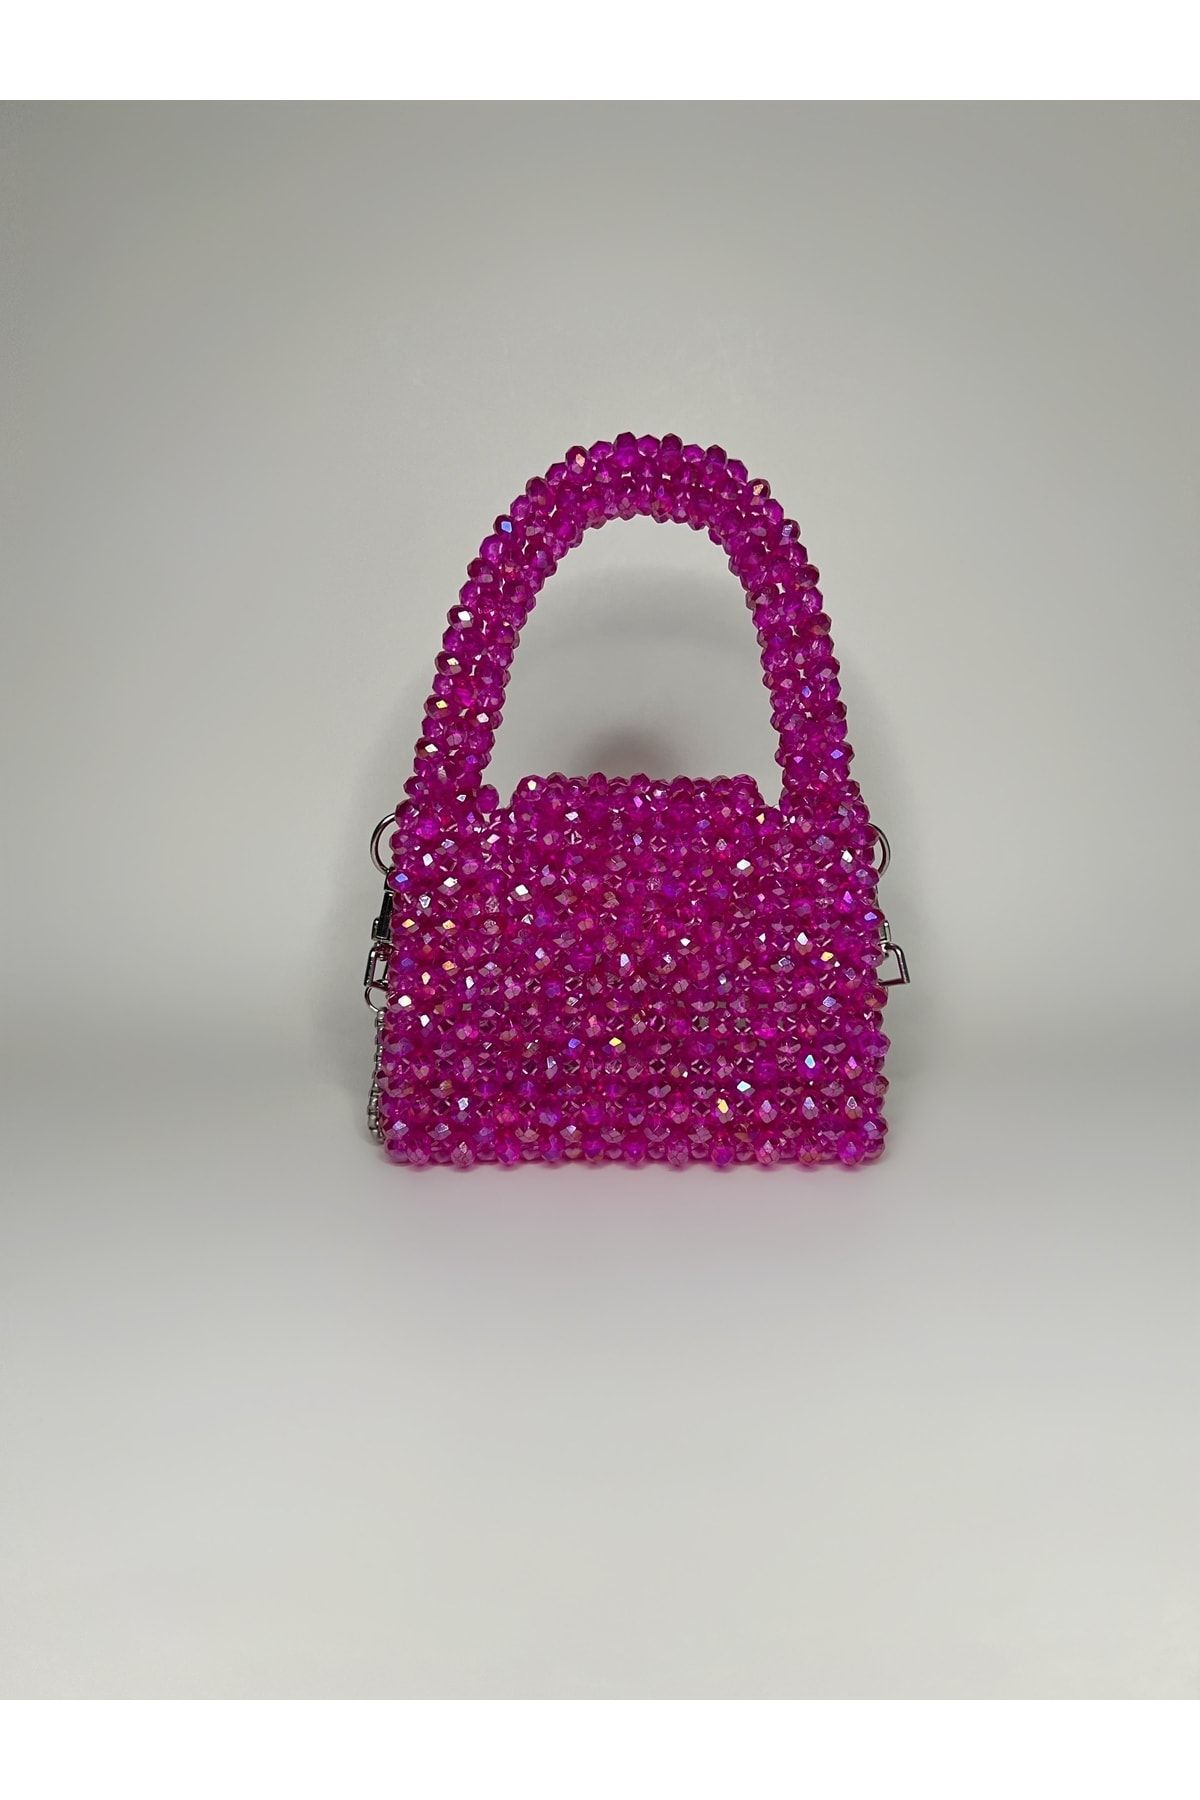 Jasmine Crystal Bag Valentino Pink Mini Fuşya Kristal Boncuk El Ve Omuz Kadın Çanta